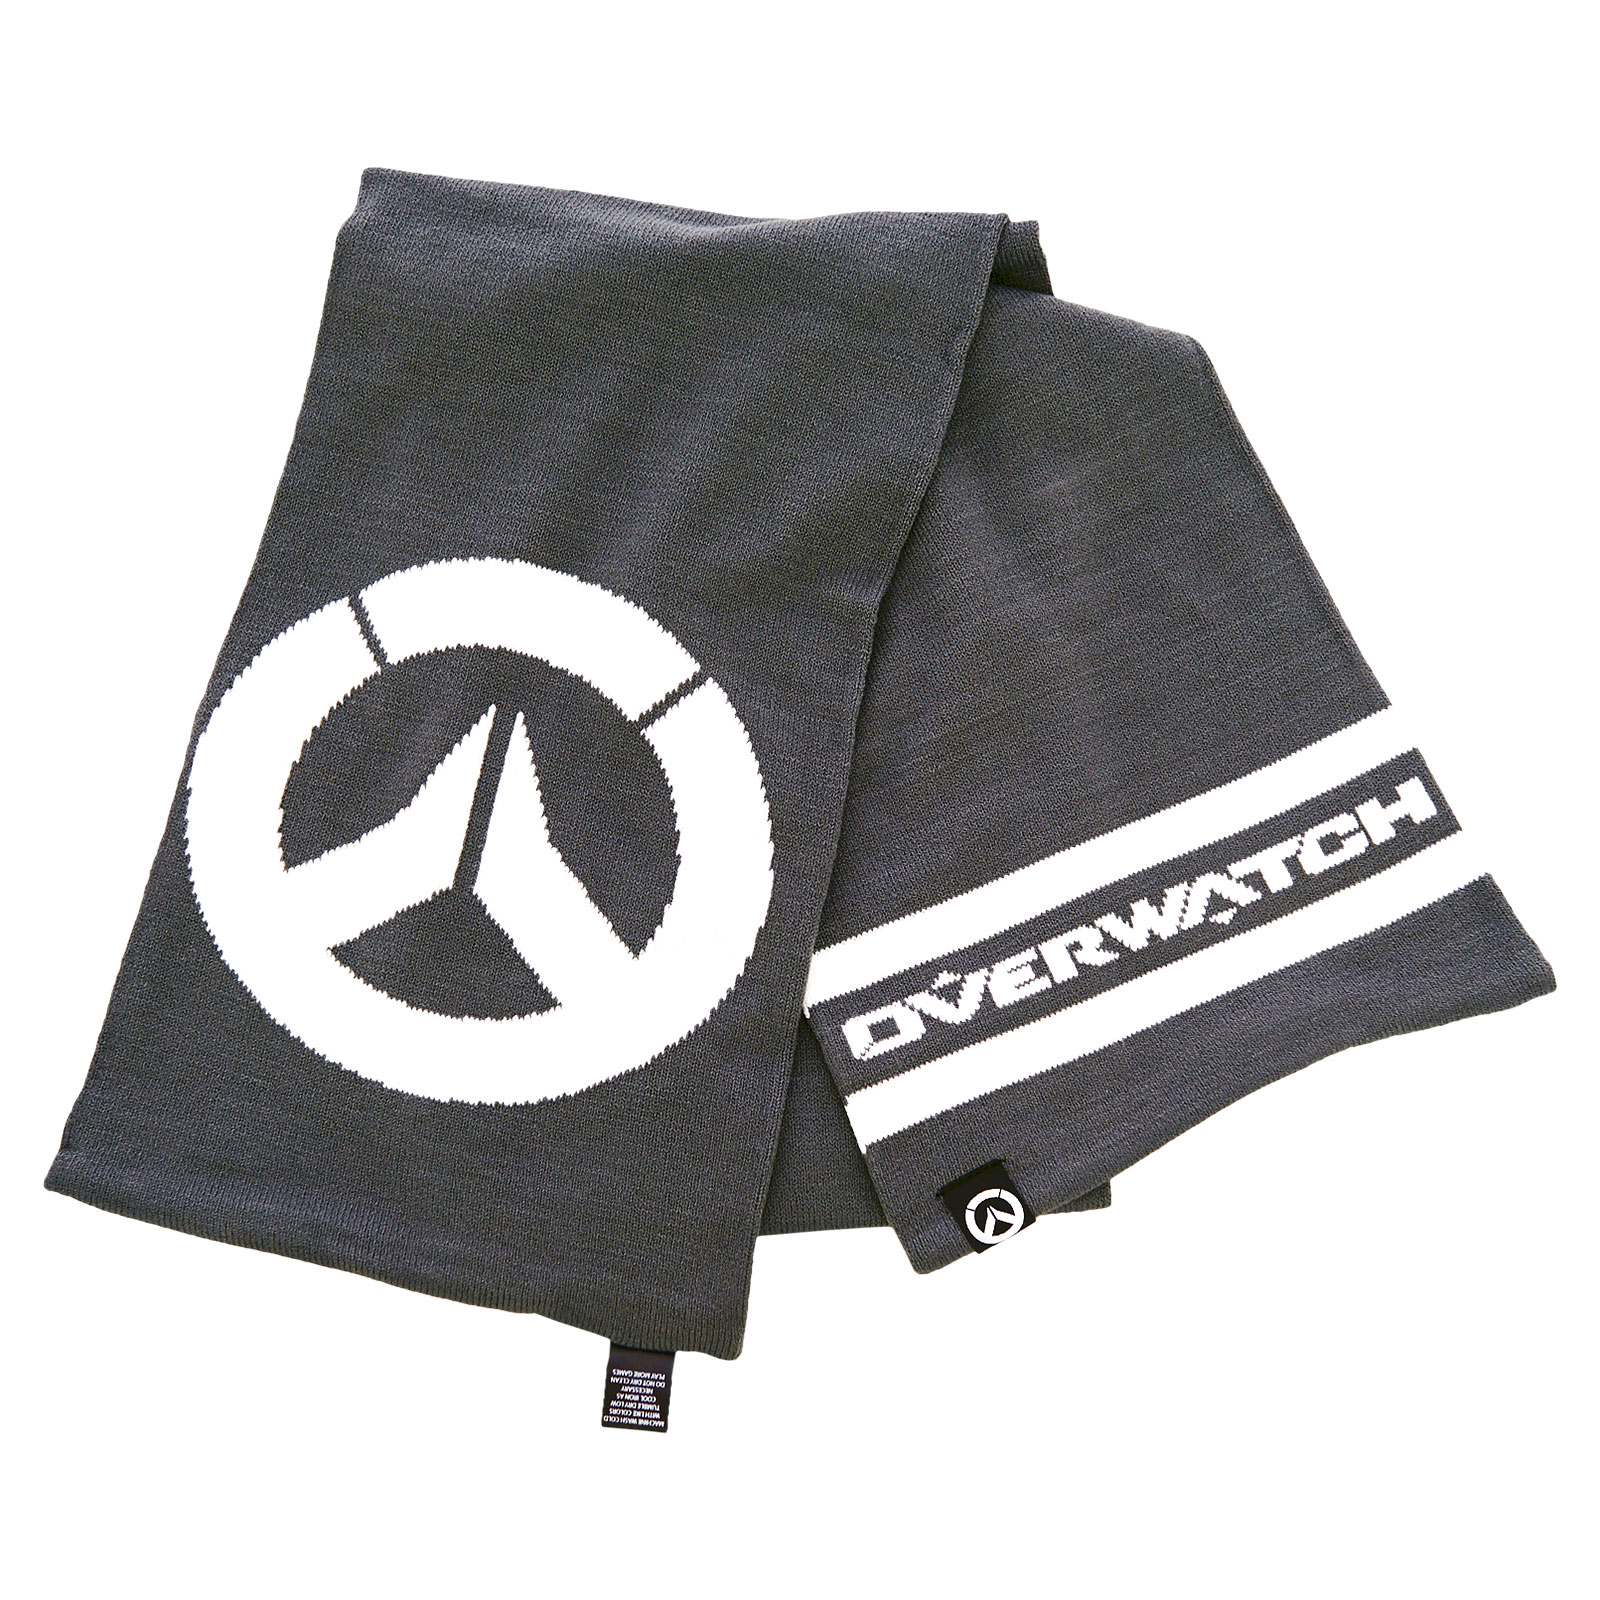 Overwatch - Logo Schal grau